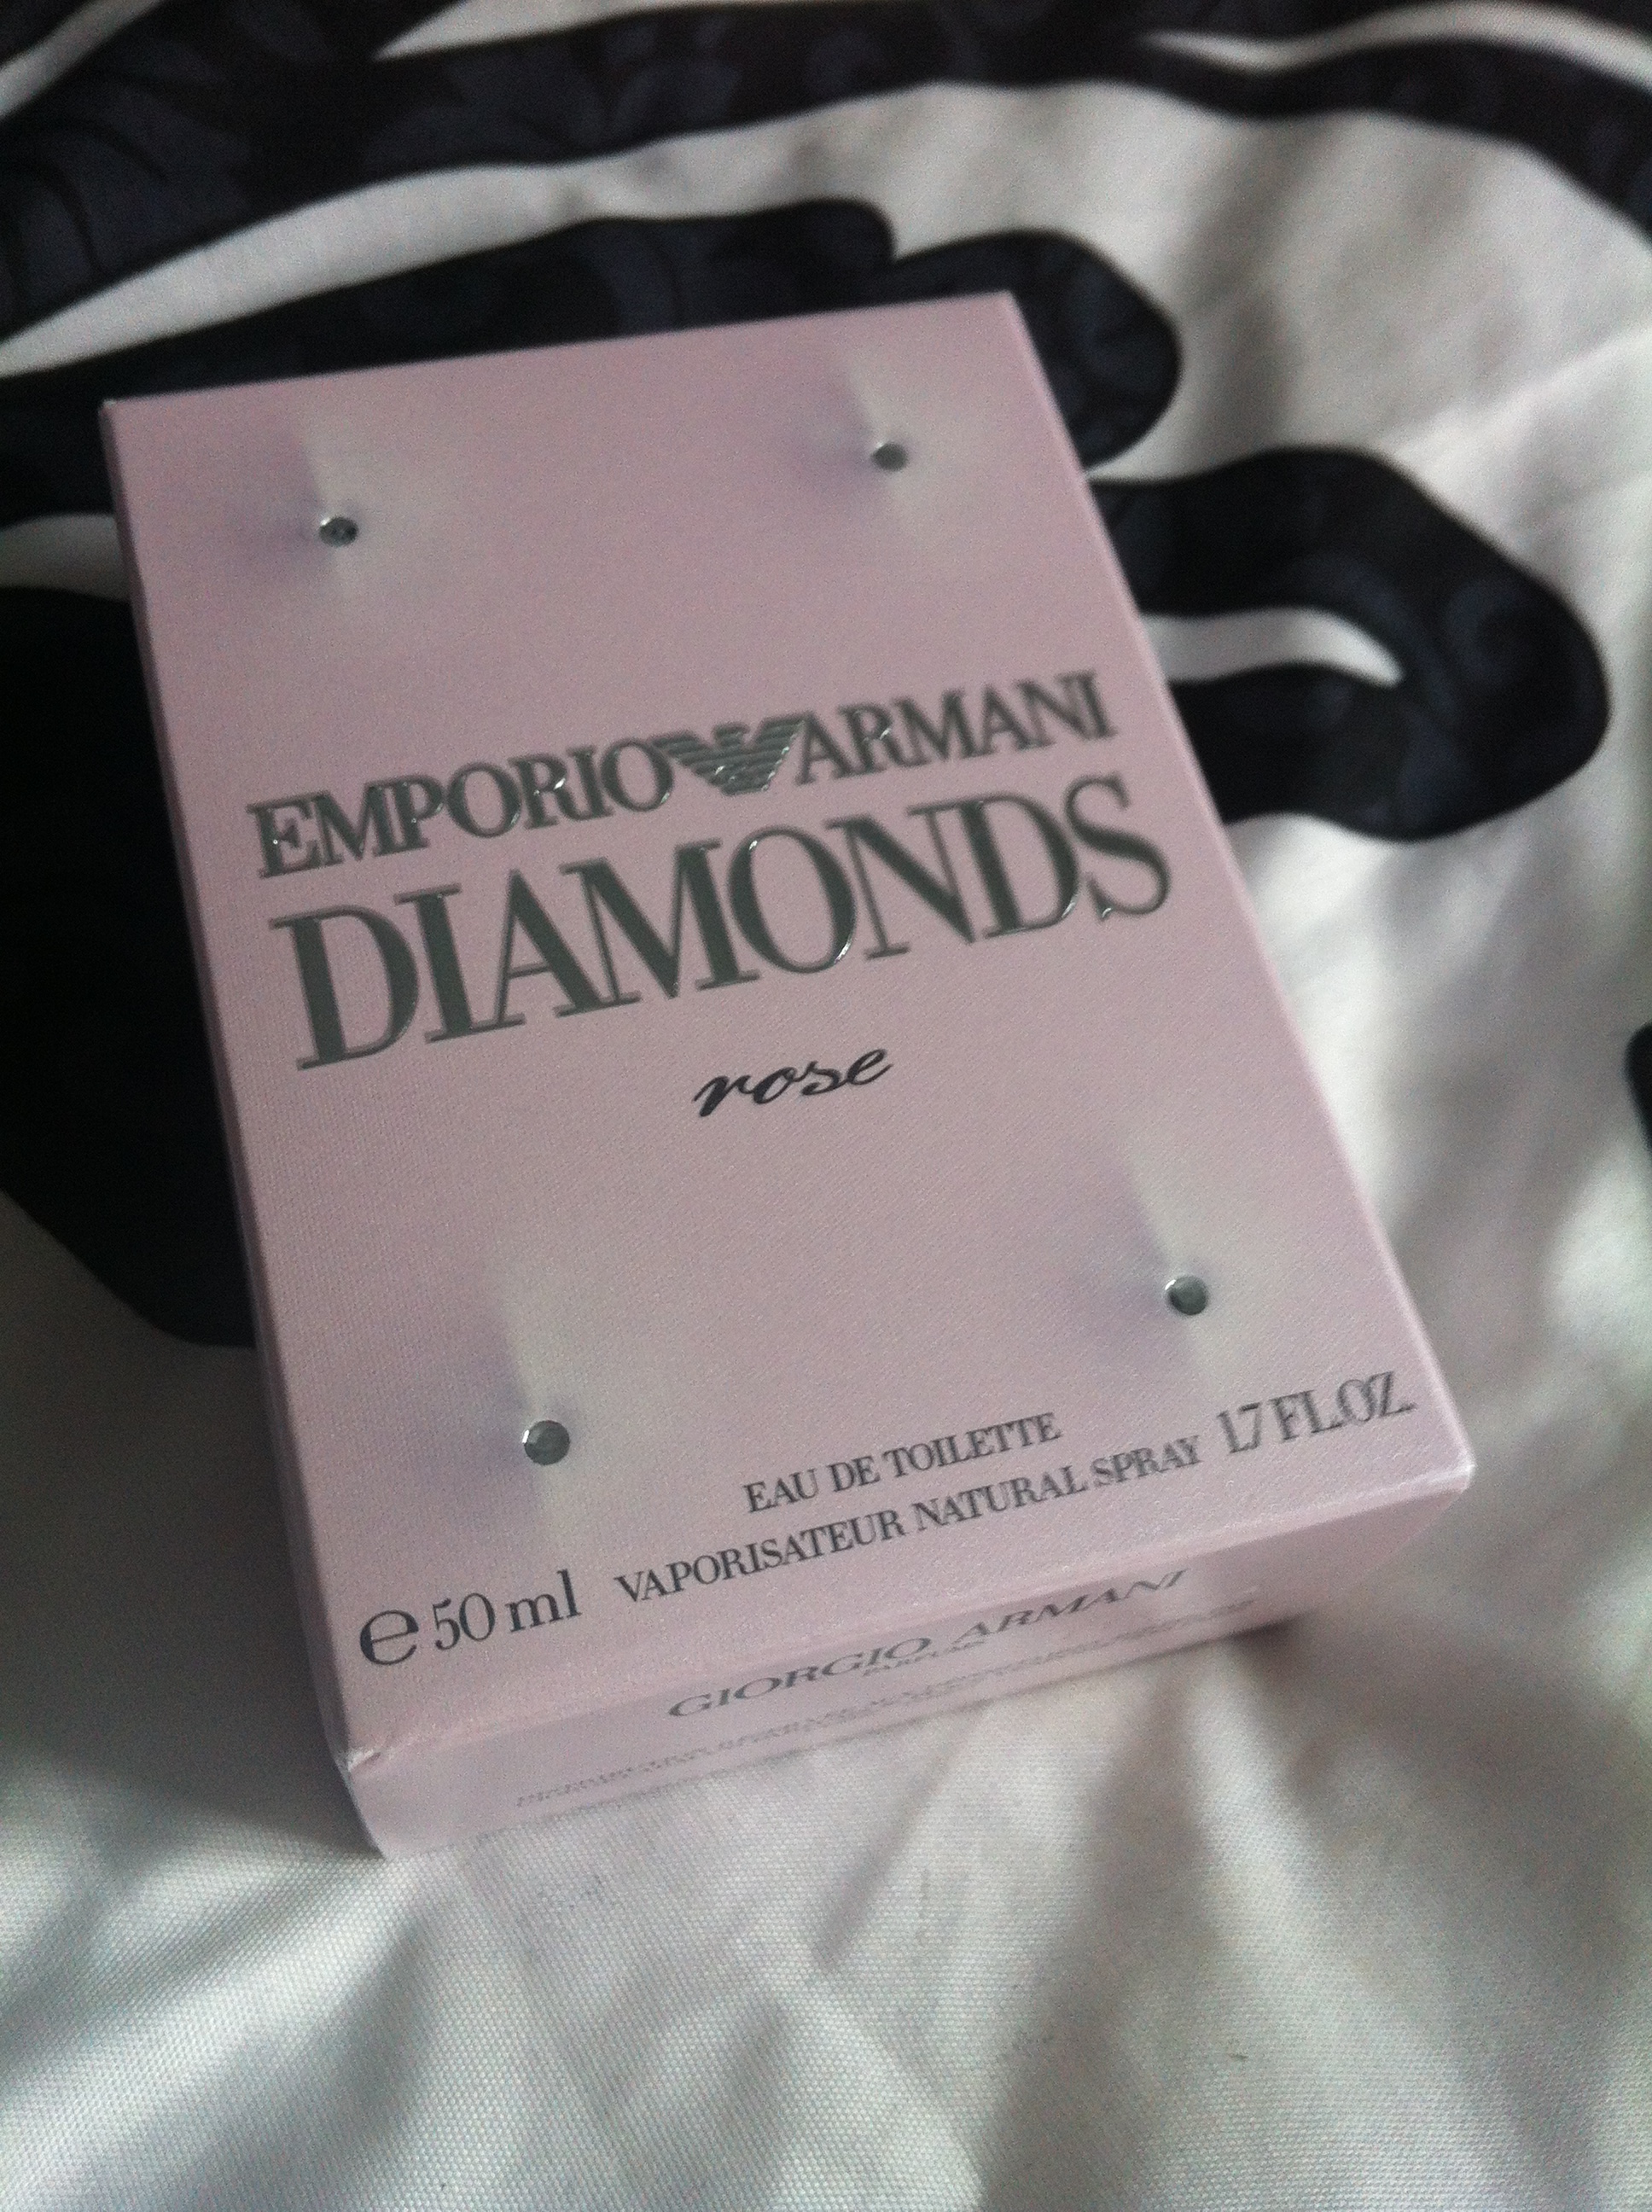 emporio armani diamonds rose 50ml